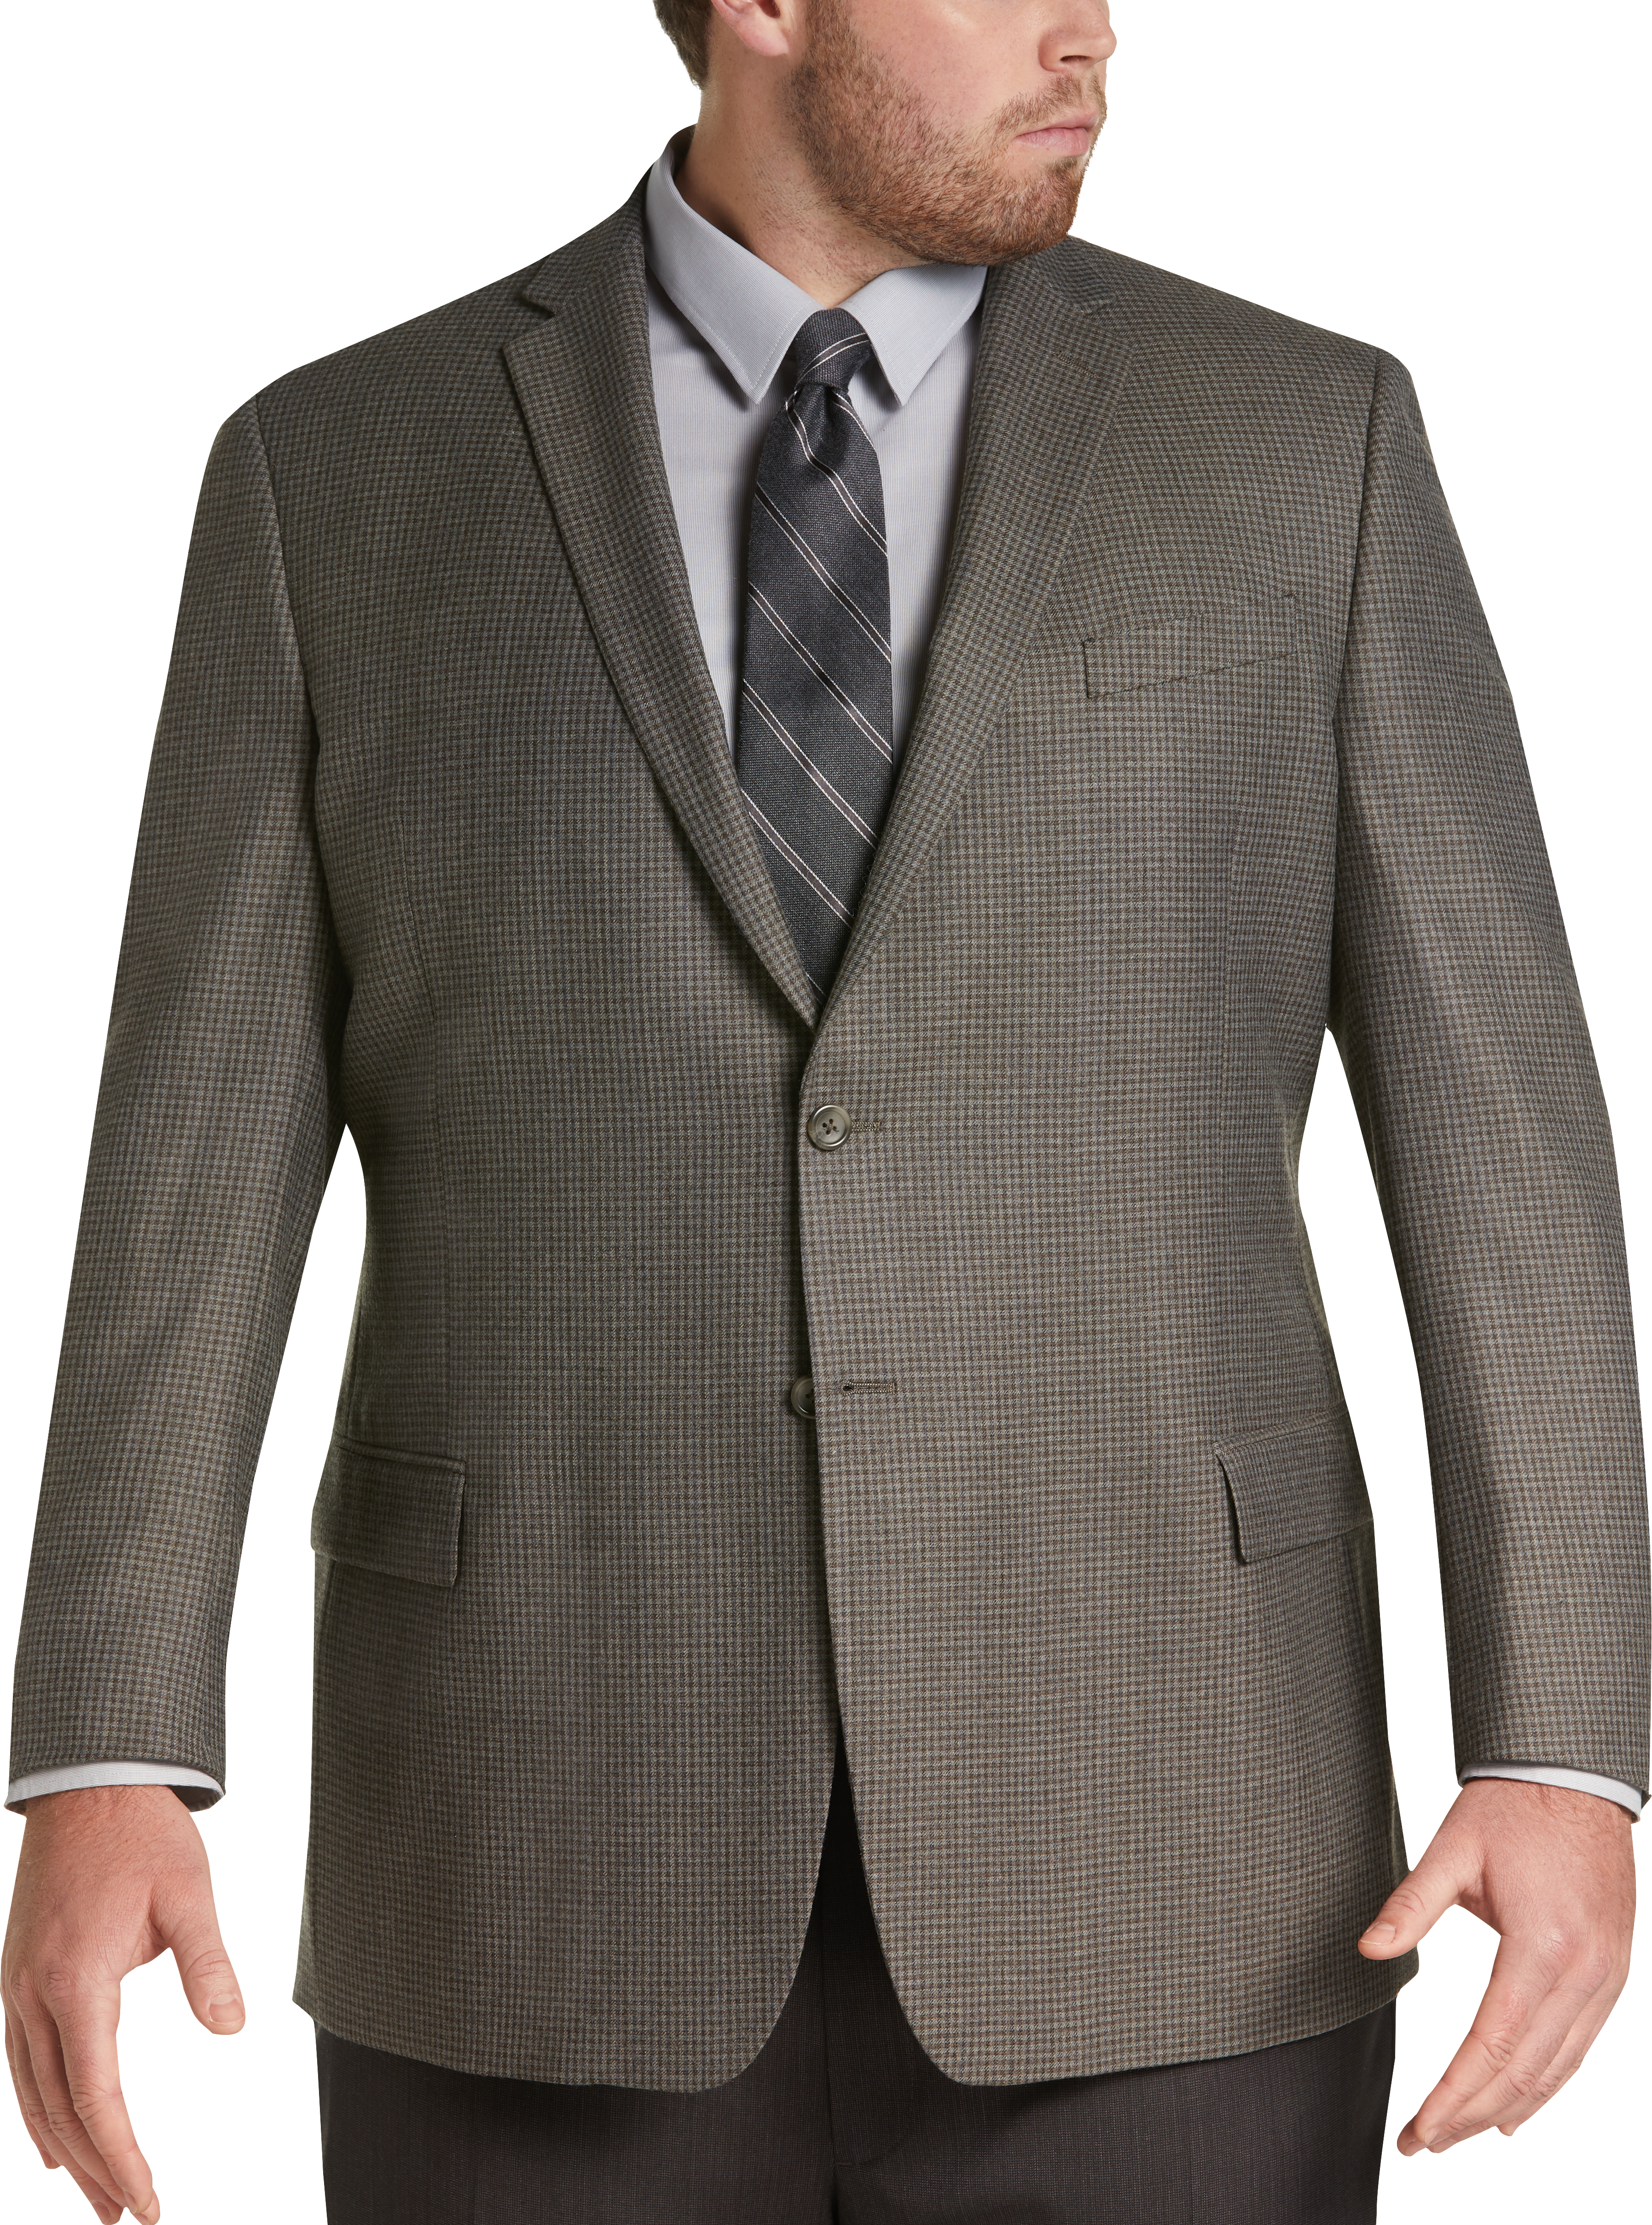 Pronto Uomo Platinum Executive Fit Sport Coat, Taupe Check - Men's Sale ...